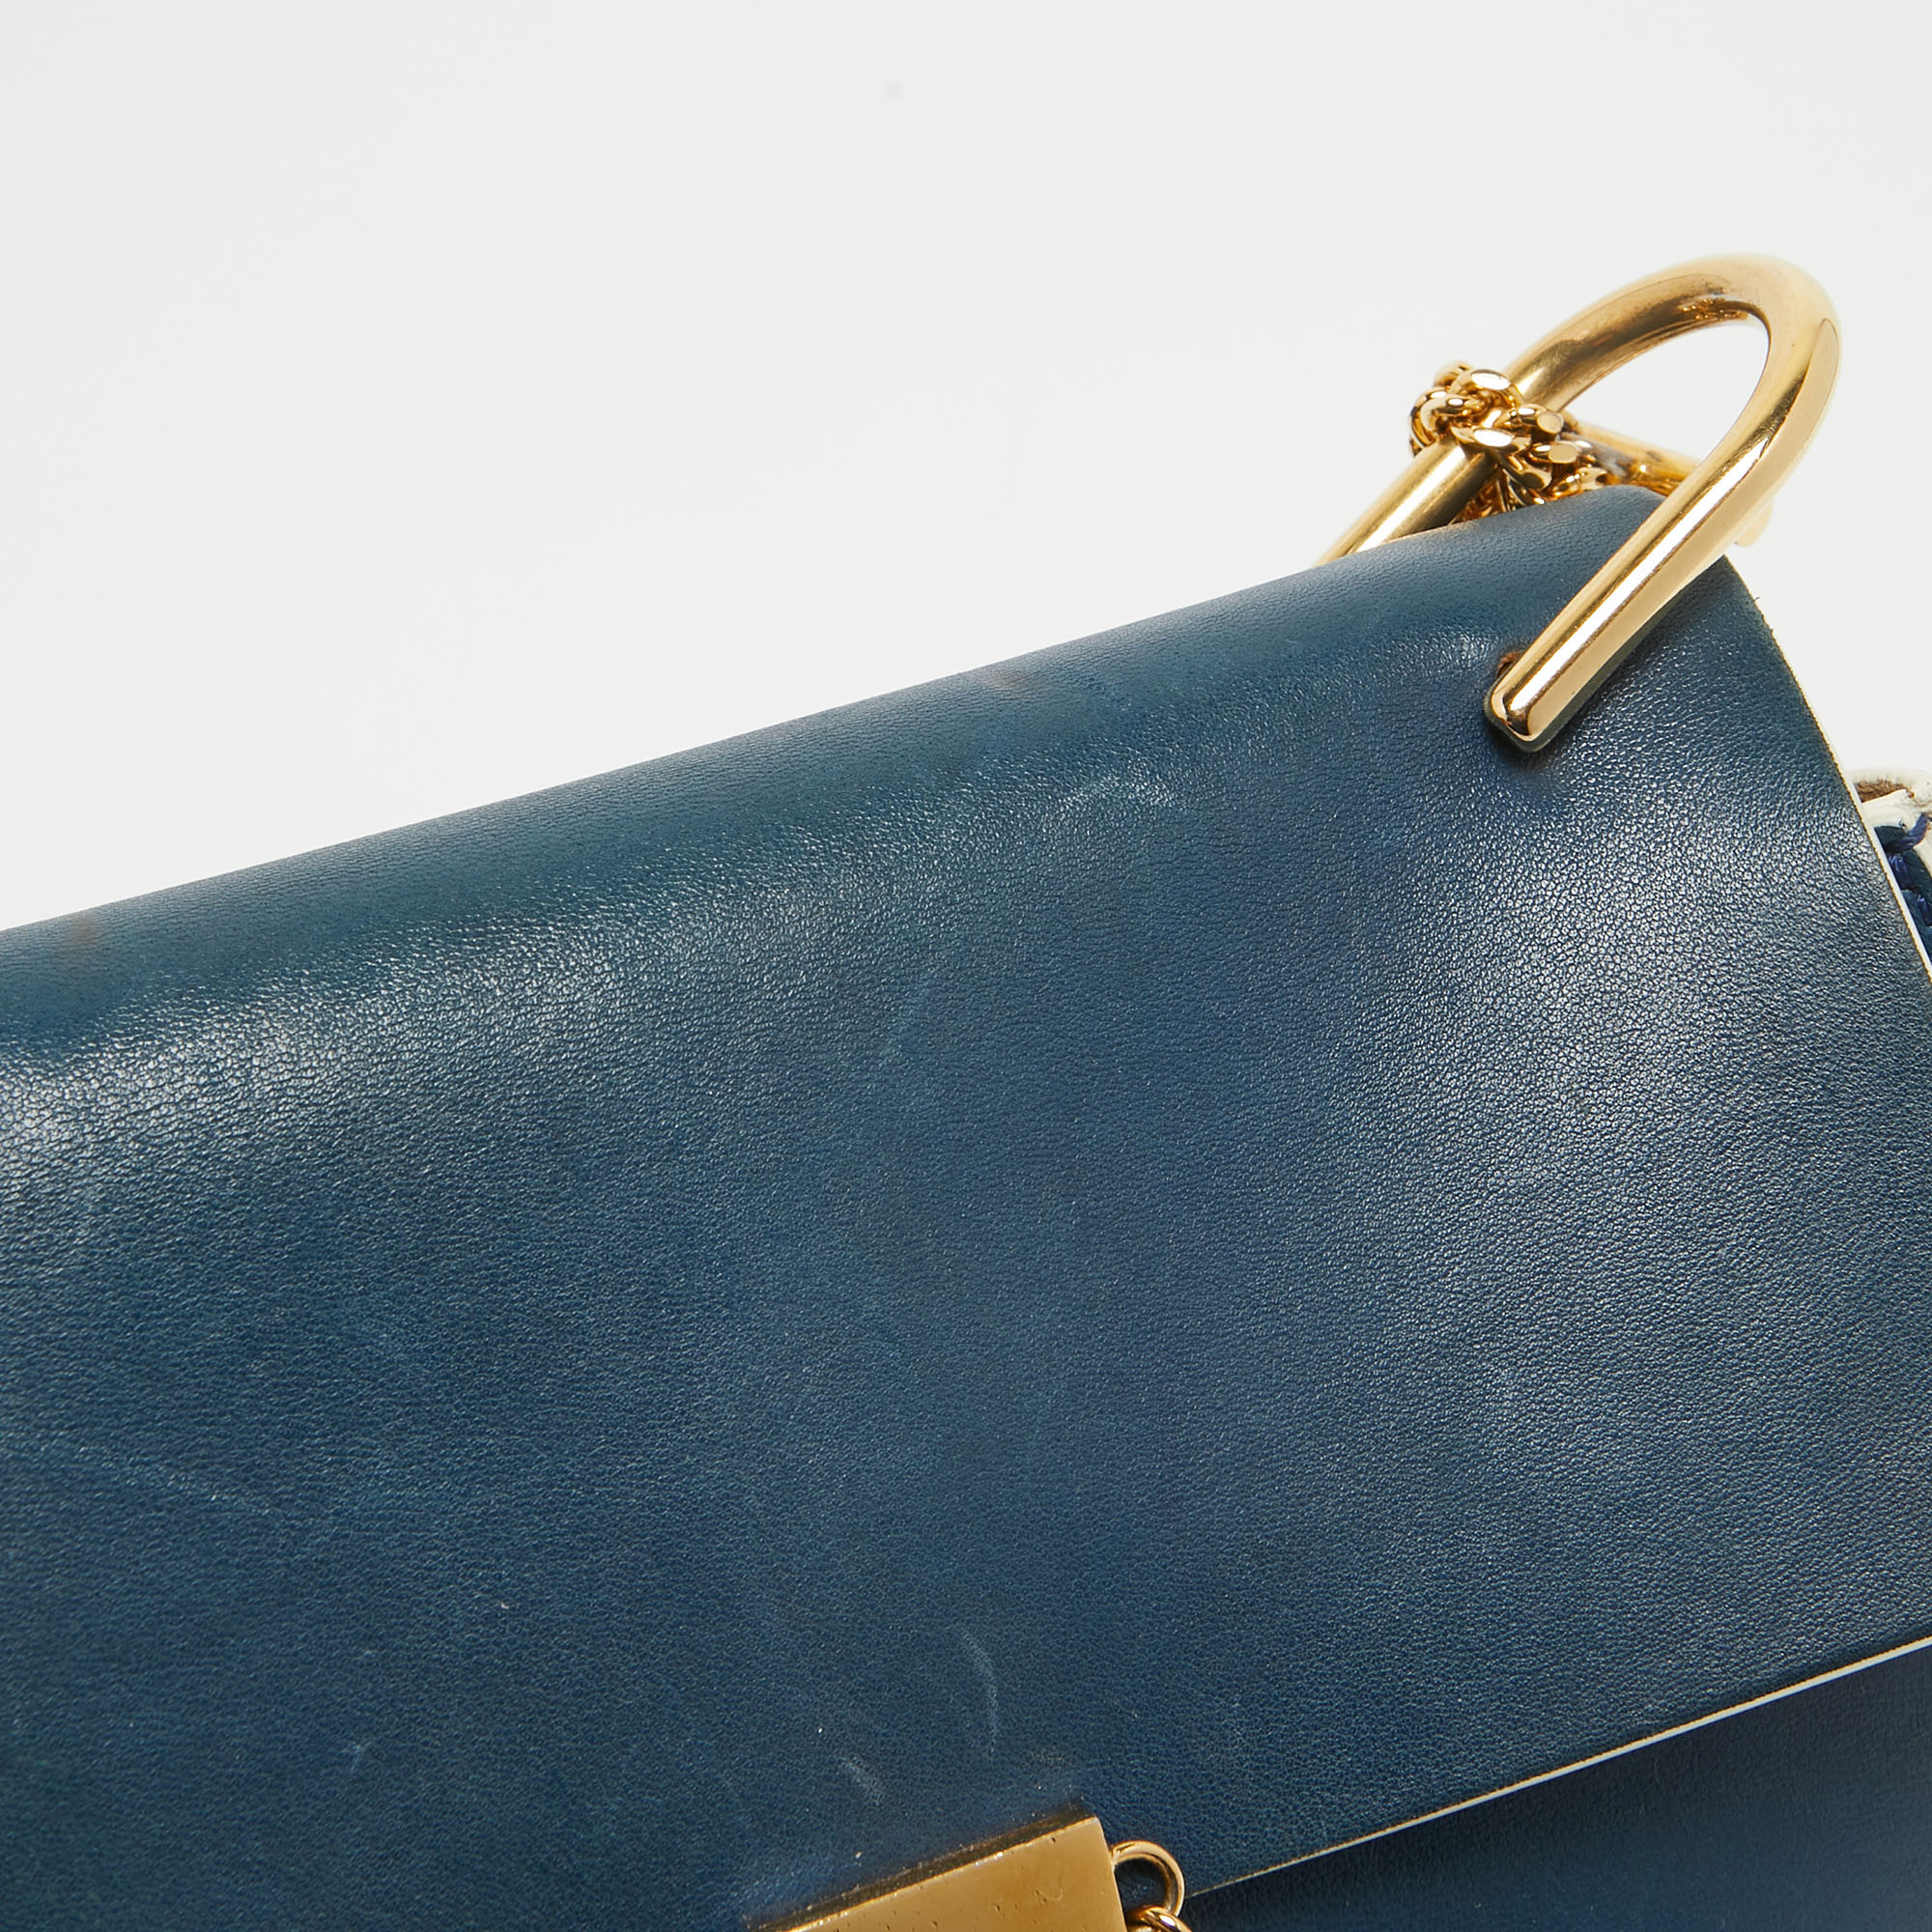 Chloe Navy Blue/Grey Leather Medium Drew Shoulder Bag